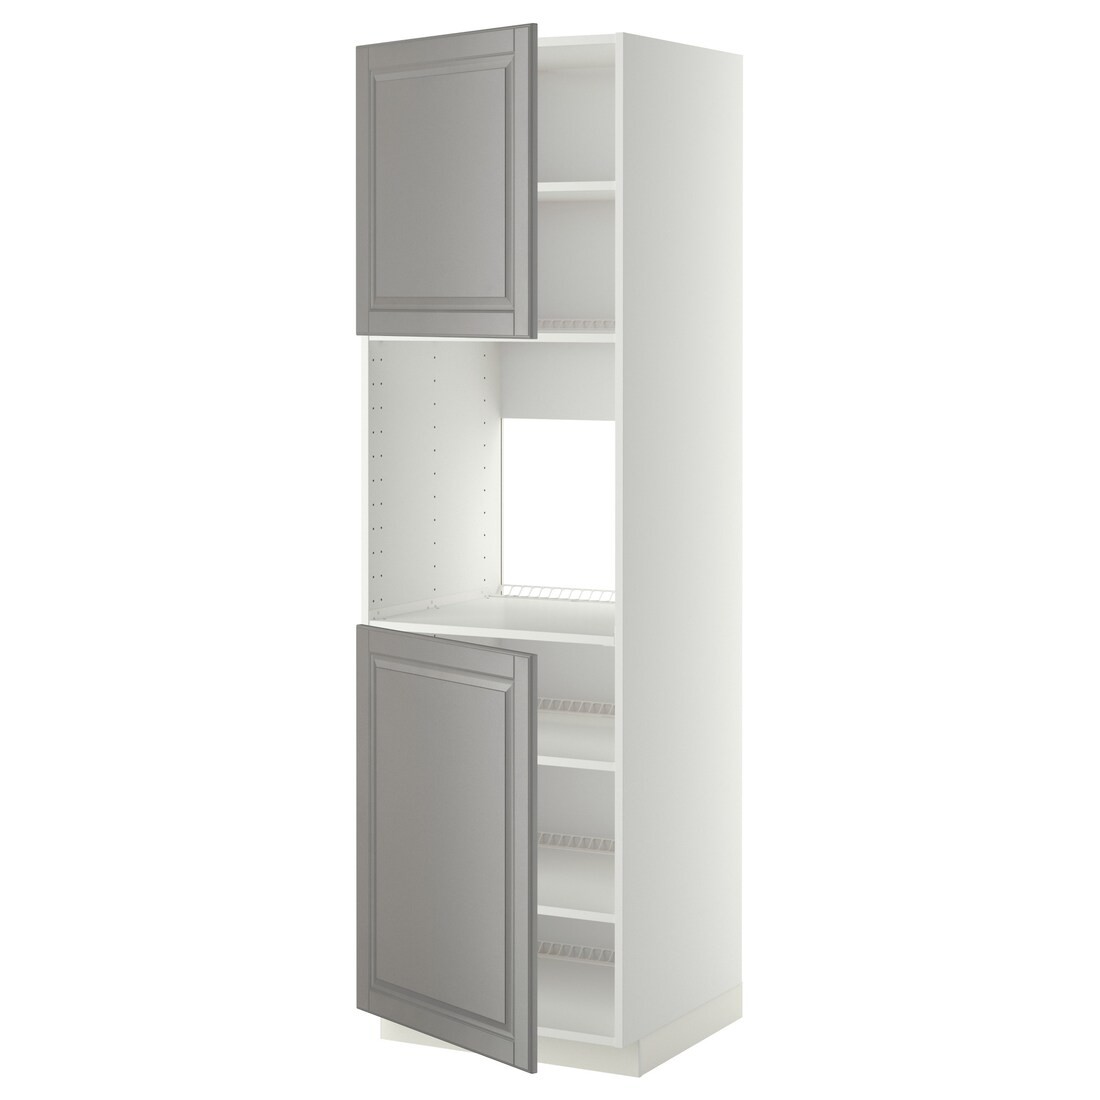 IKEA METOD МЕТОД Высок шкаф для духовки / 2 дверцы / полки, белый / Bodbyn серый, 60x60x200 см 99465892 | 994.658.92